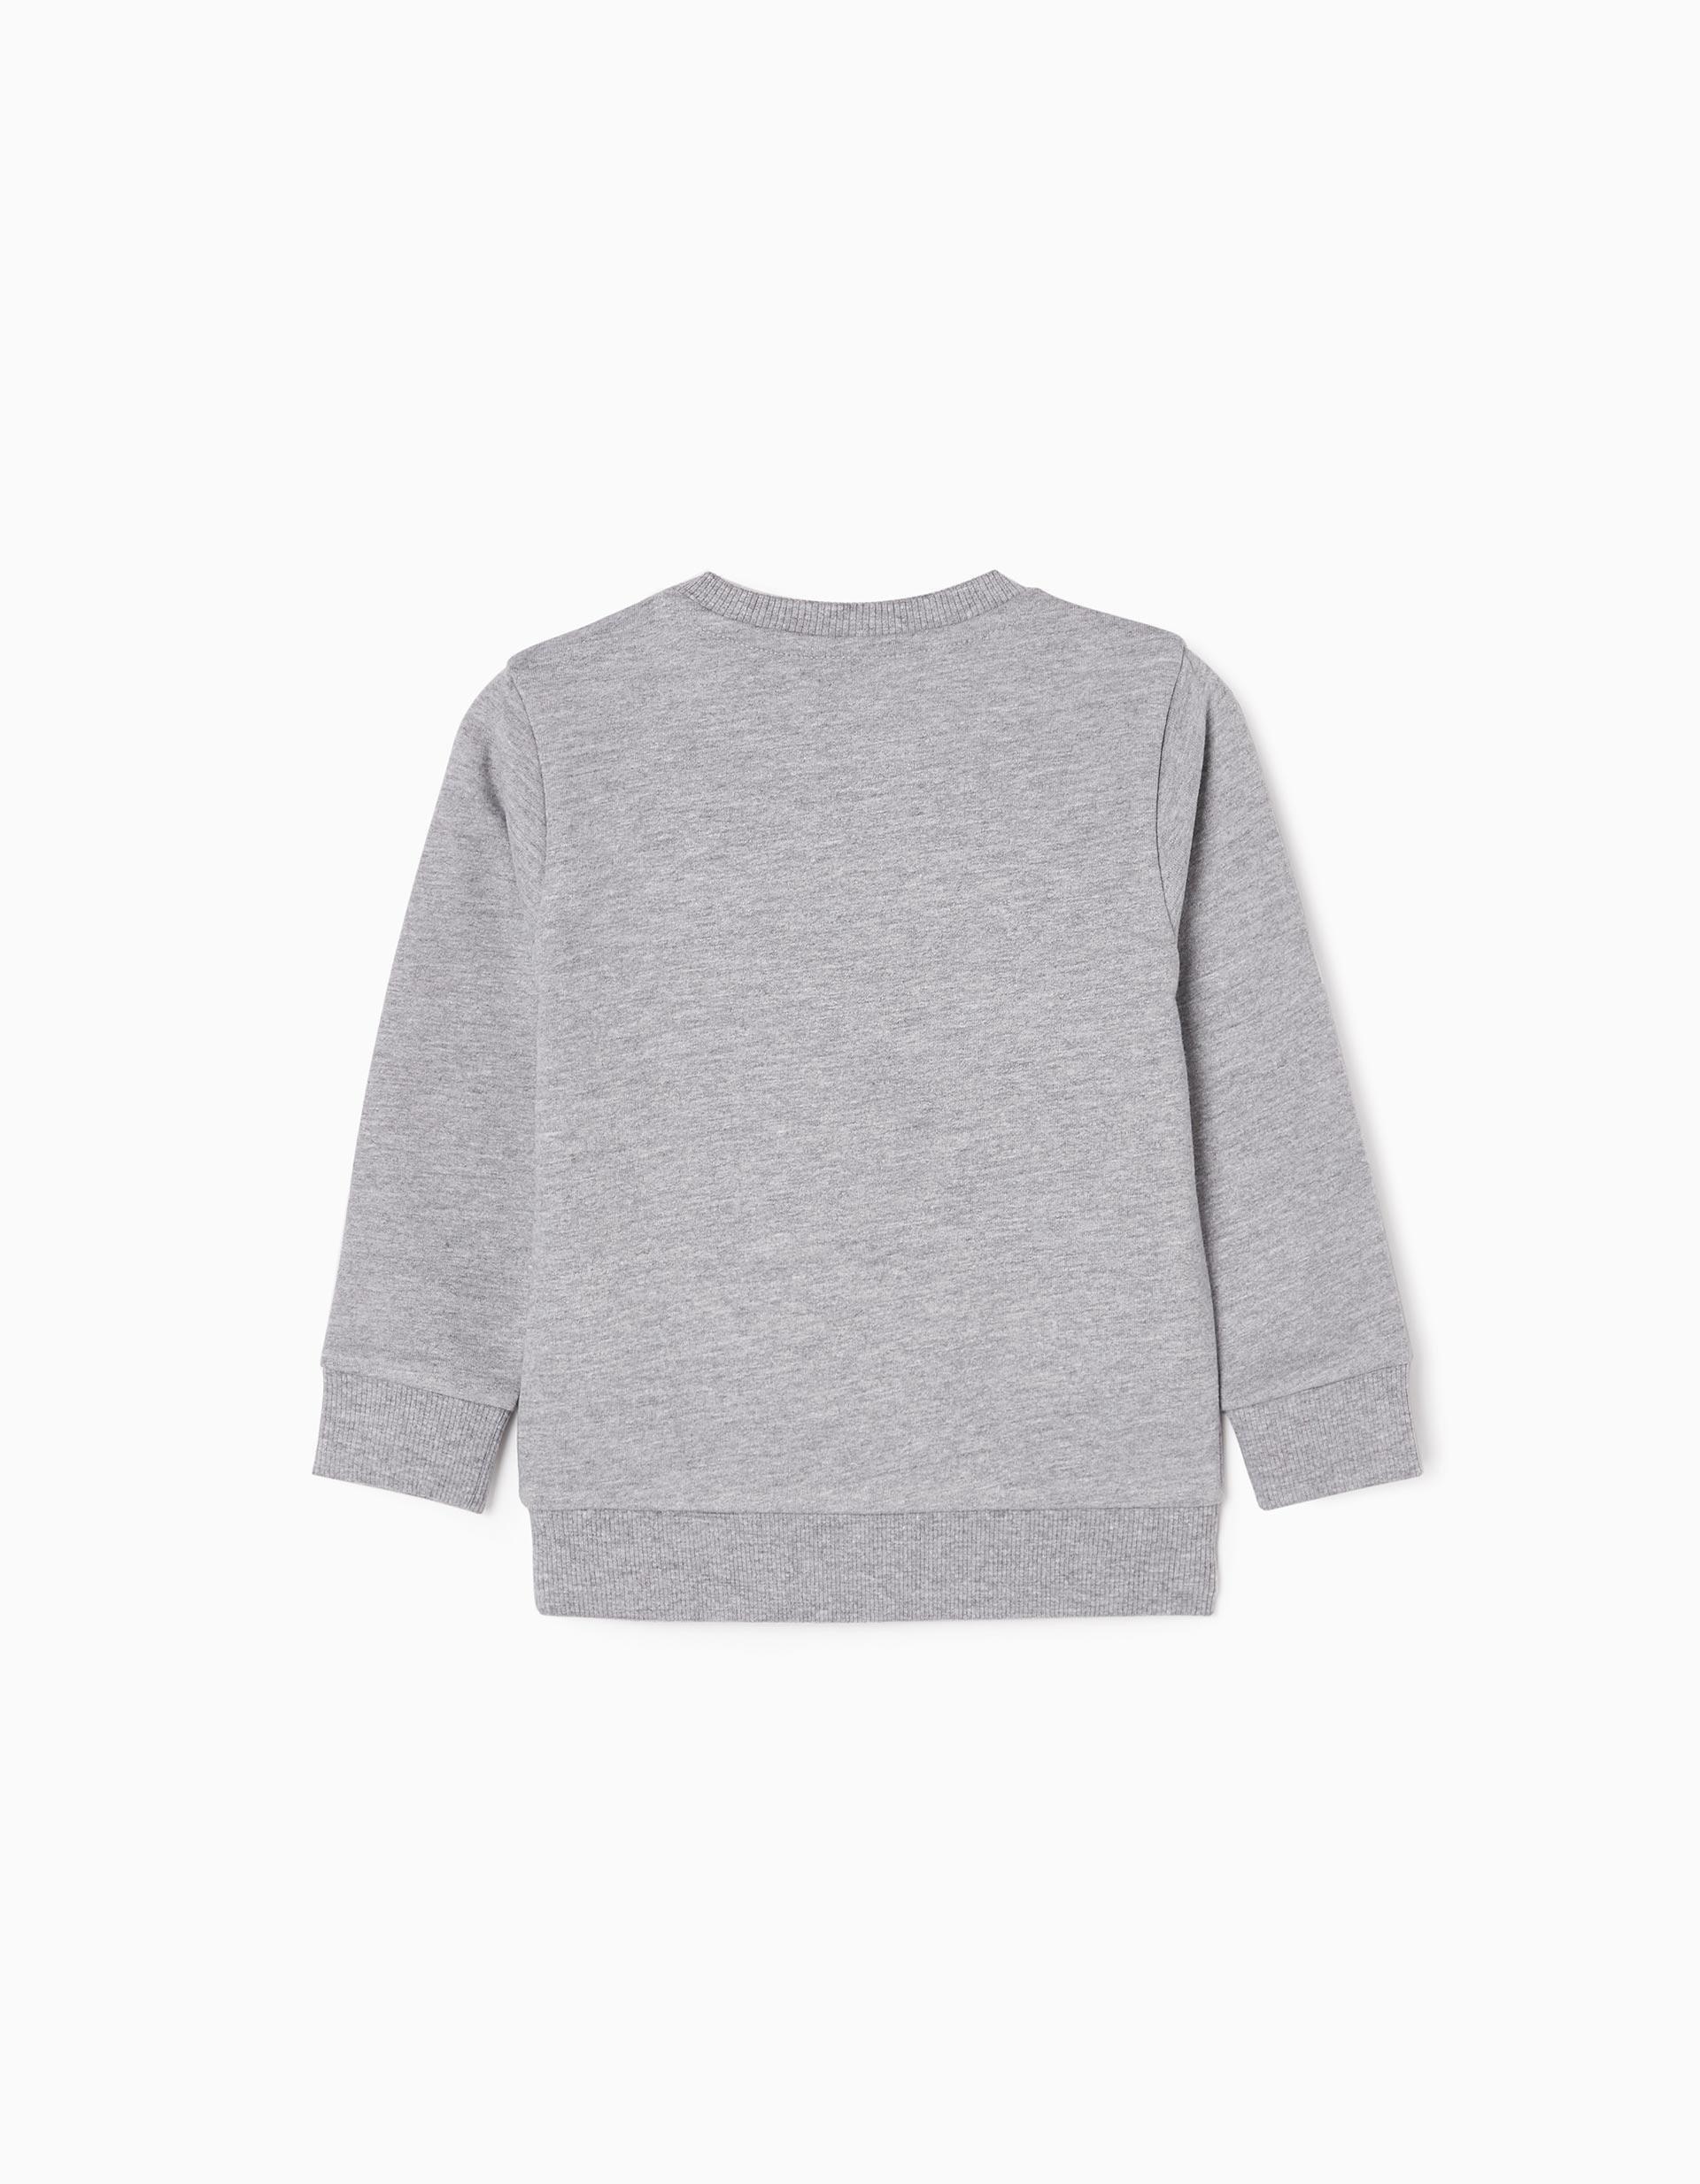 Zippy - Grey Brushed Cotton Sweatshirt, Baby Boys